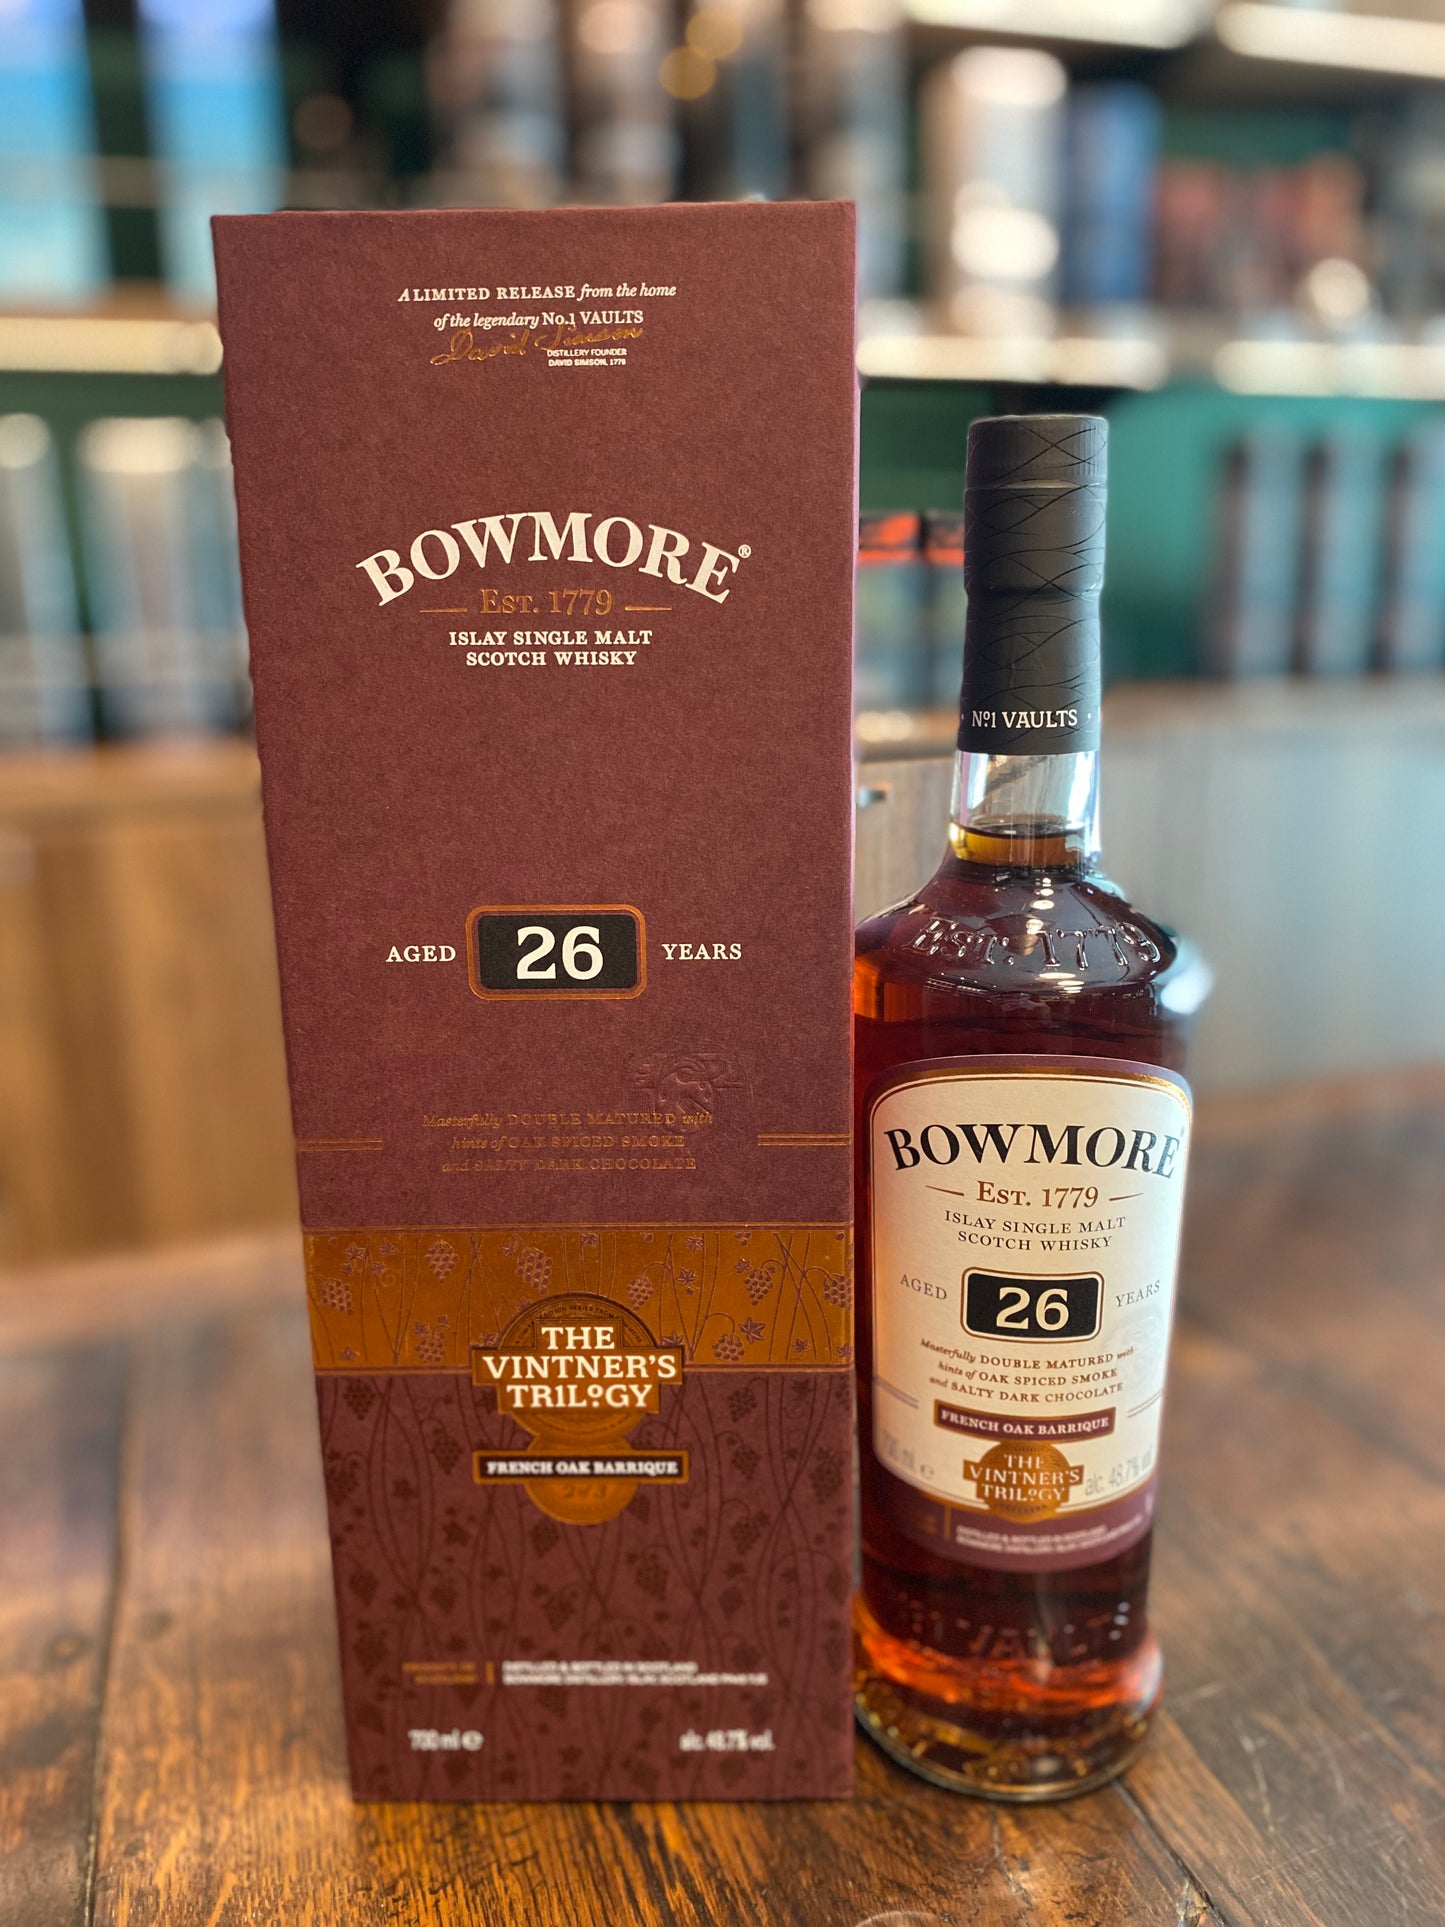 Bowmore 'Vintner's Trilogy' French Oak Barrique 26 Year Old Single Malt Scotch Whisky,700ml,48.7%